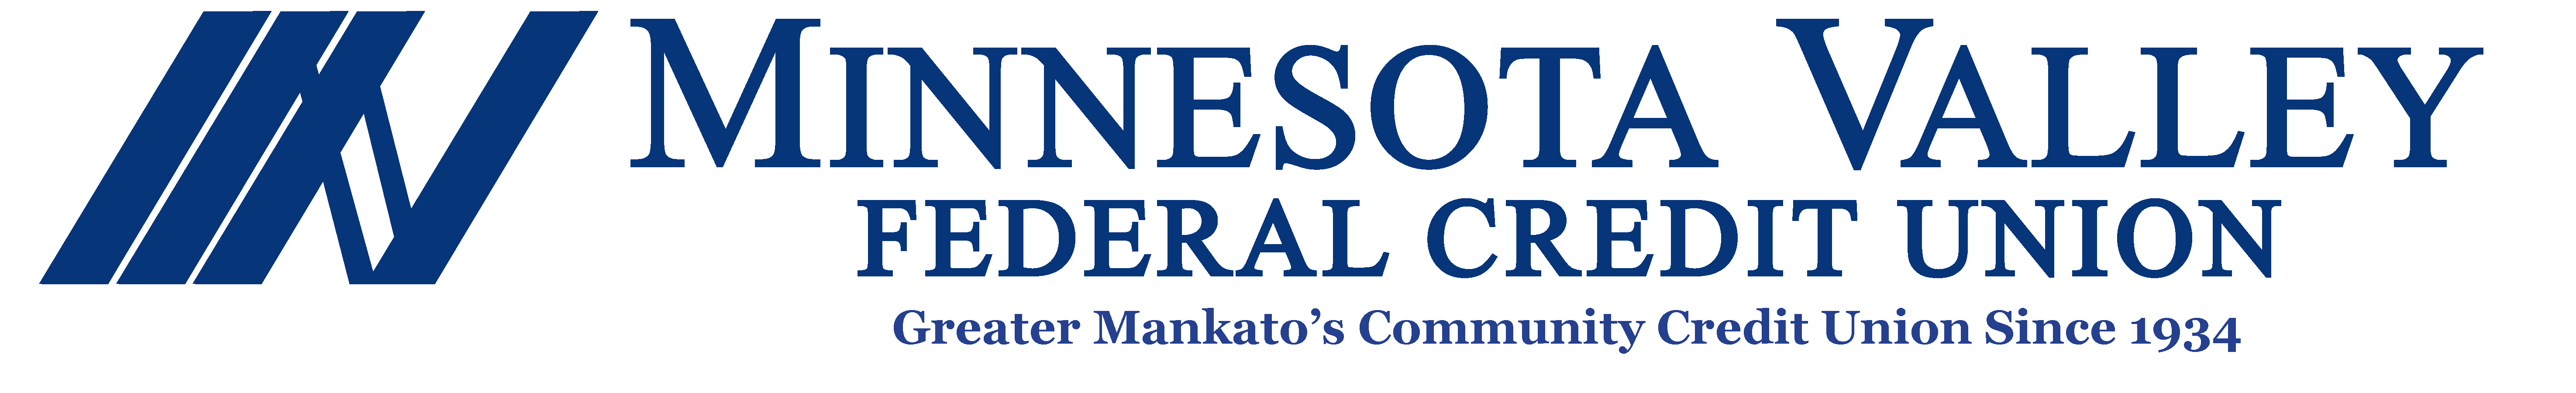 Minnesota Valley Federal Credit Union Logo